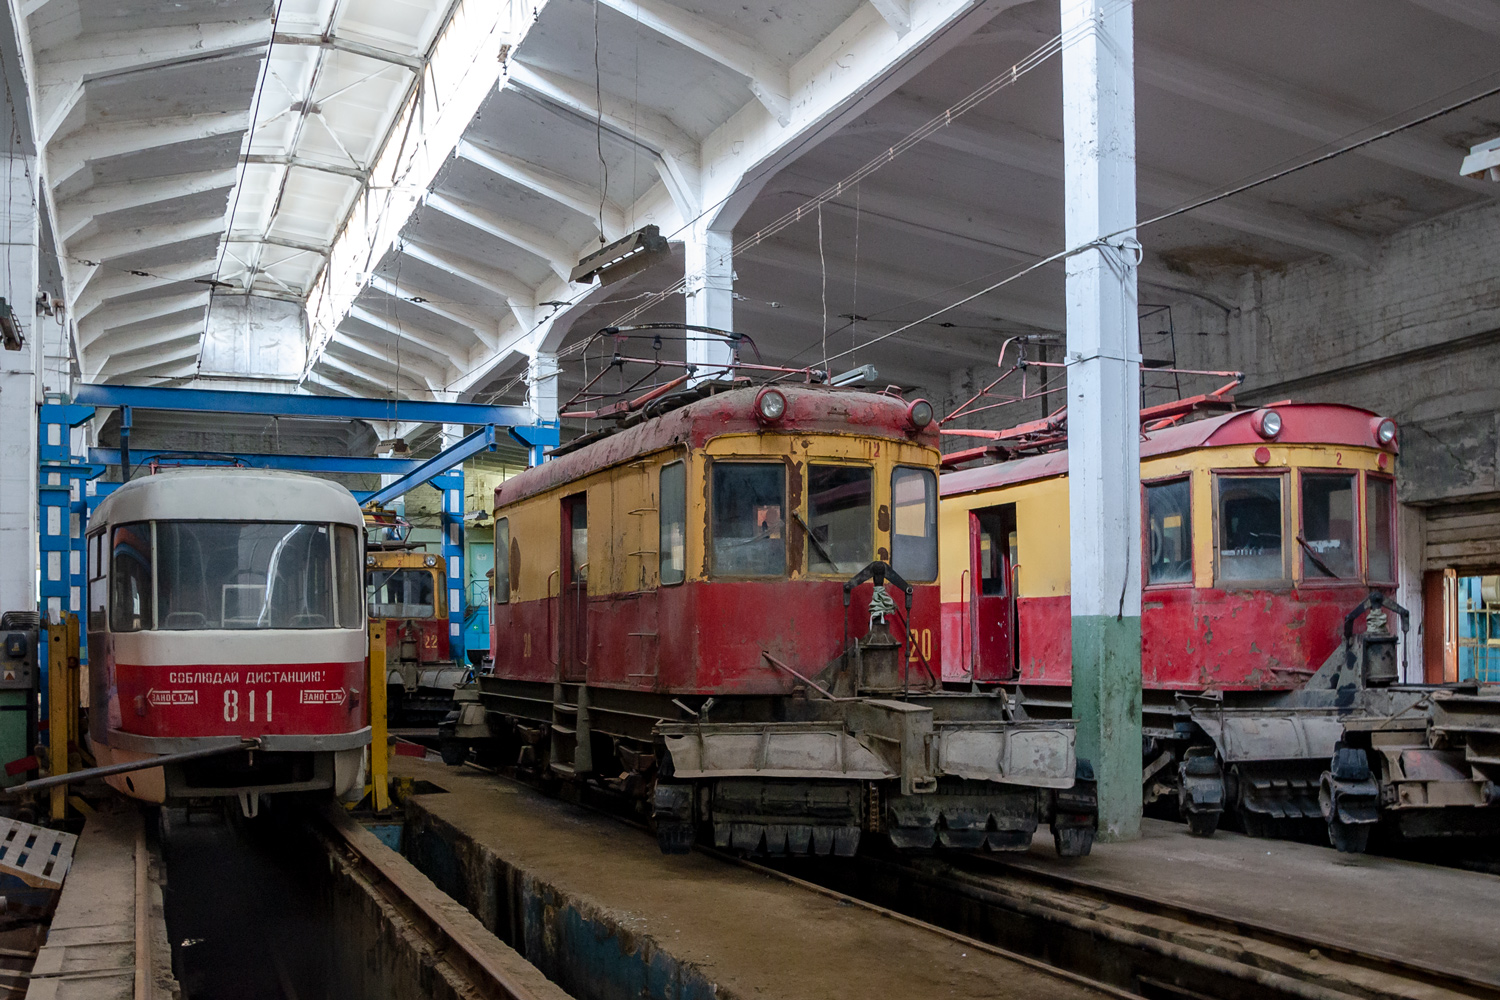 Самара, Tatra T3SU № 811; Самара, ГС-4 (ГВРЗ) № СН-20; Самара — Городское трамвайное депо